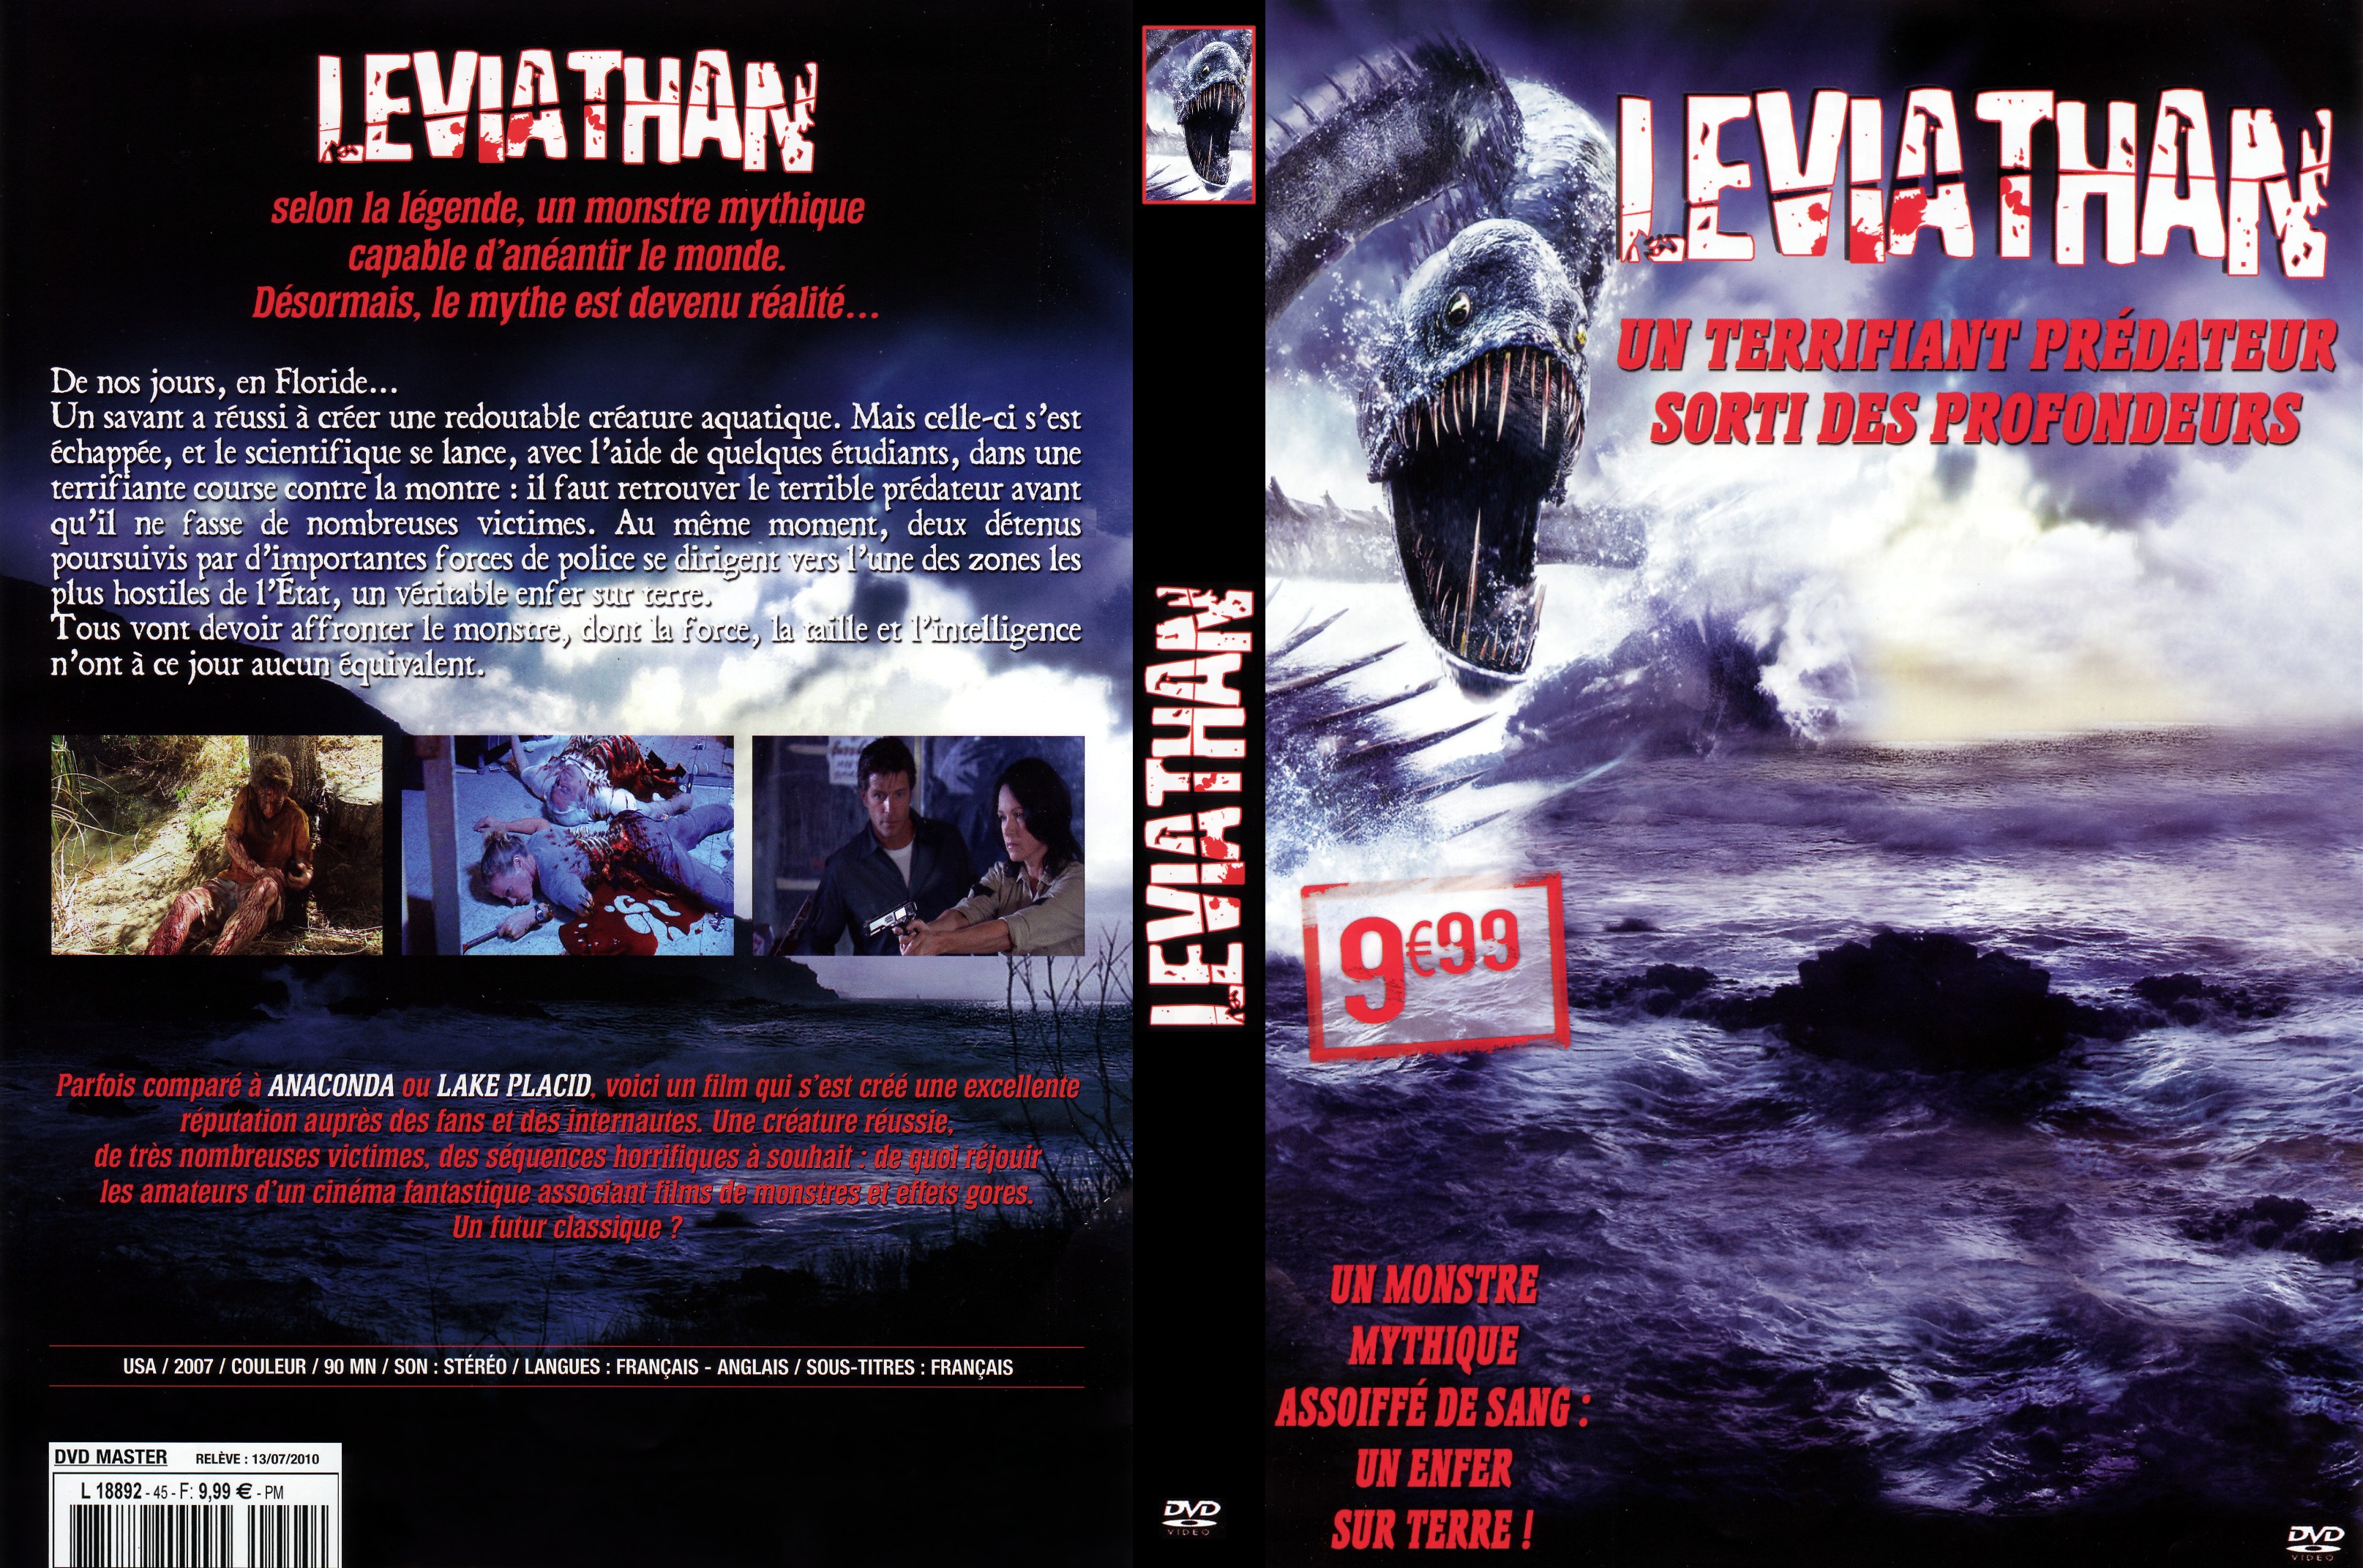 Jaquette DVD Leviathan (2007) v2